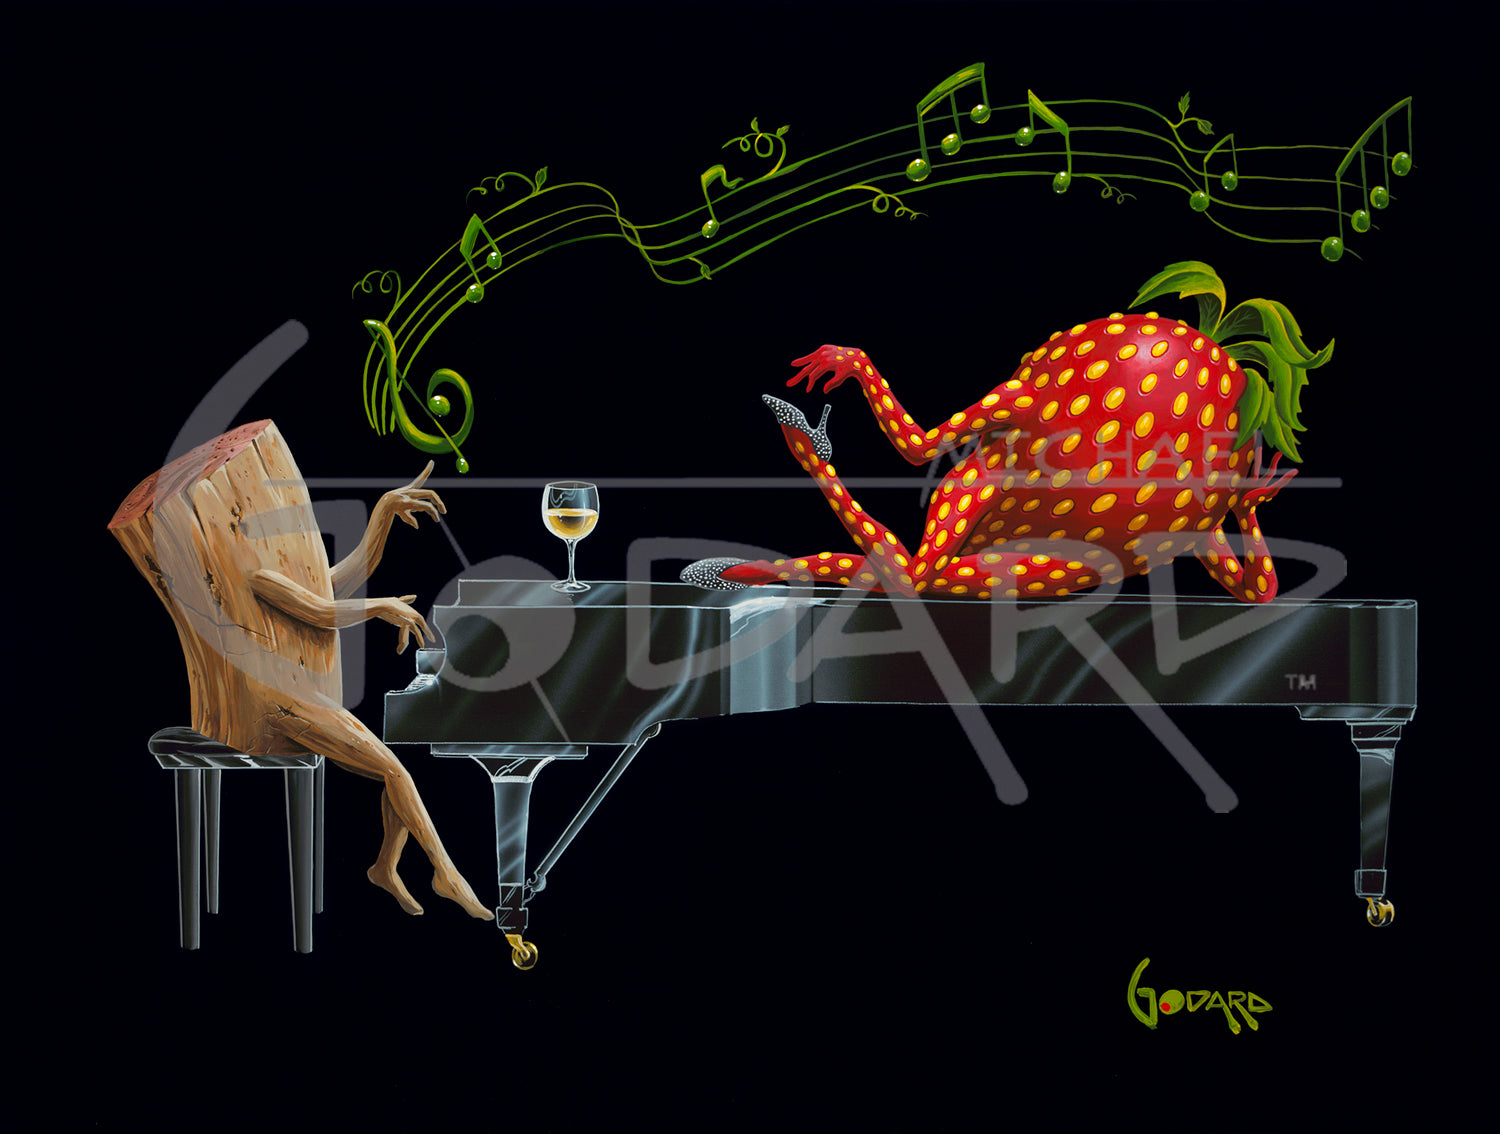 Michael Godard "Strawberry Jams" Limited Edition Canvas Giclee